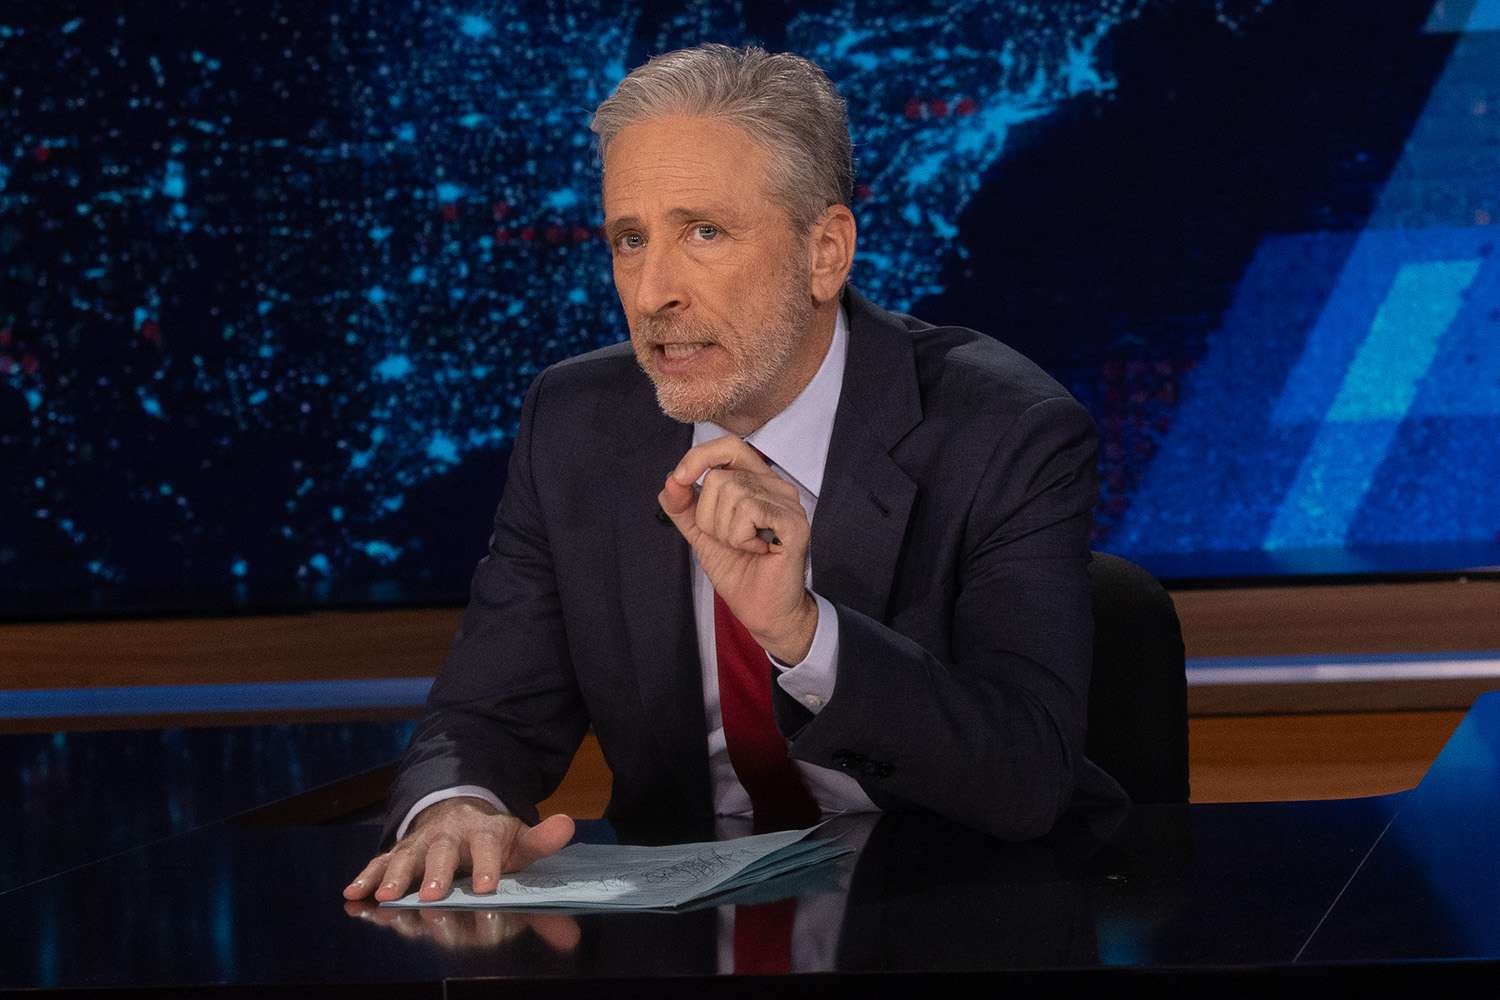 Jon Stewart Criticizes Joe Biden’s Memory Lapses And Age In “The Daily Show” Return